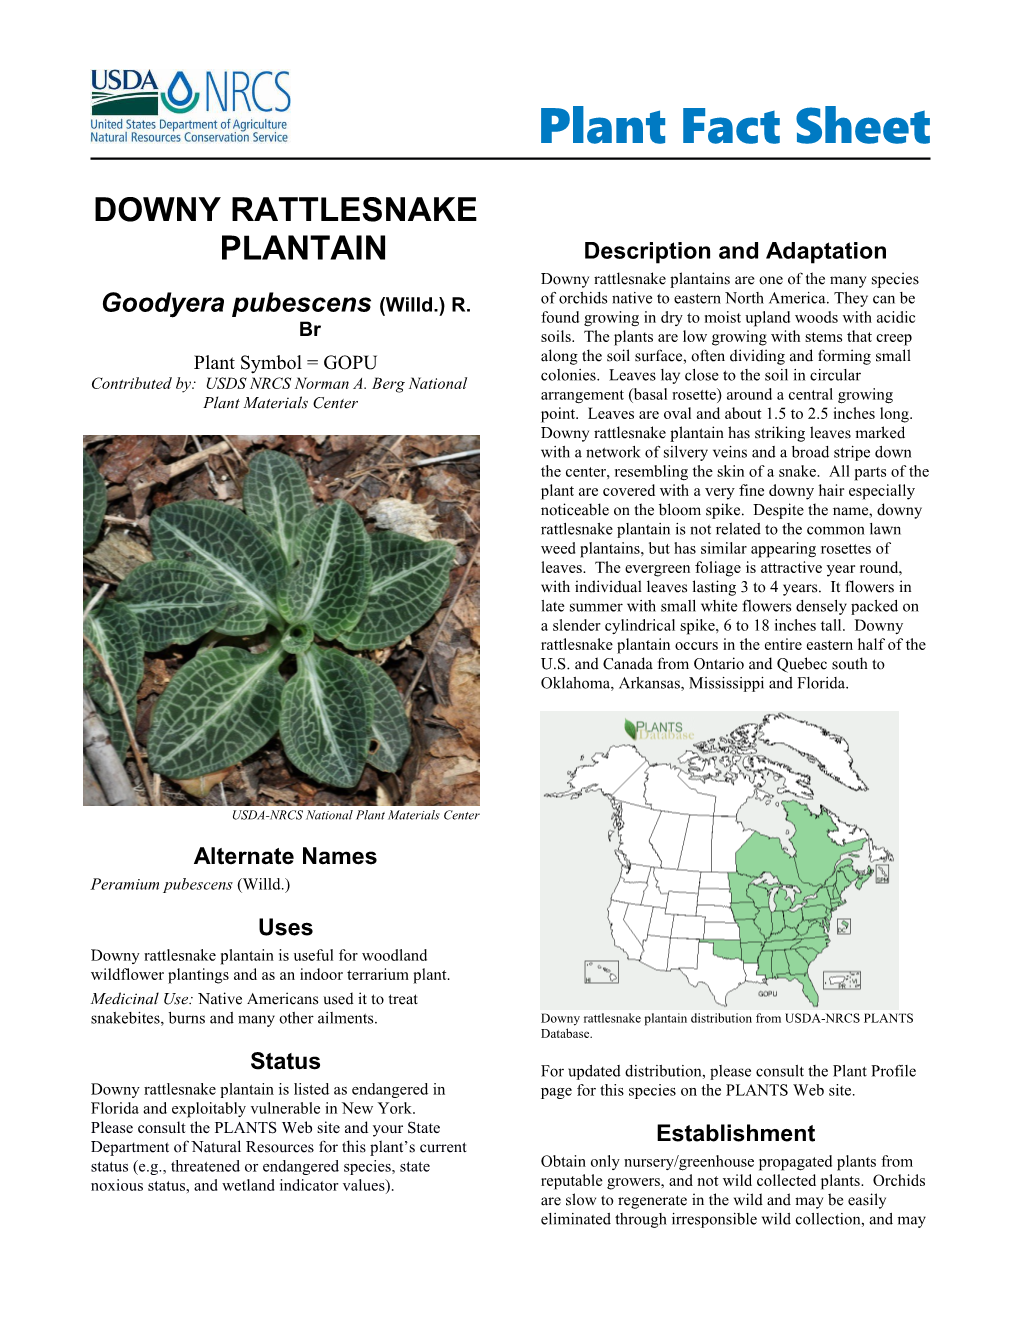 Downy Rattlesnake Plantain (Goodyera Pubescens) Plant Fact Sheet